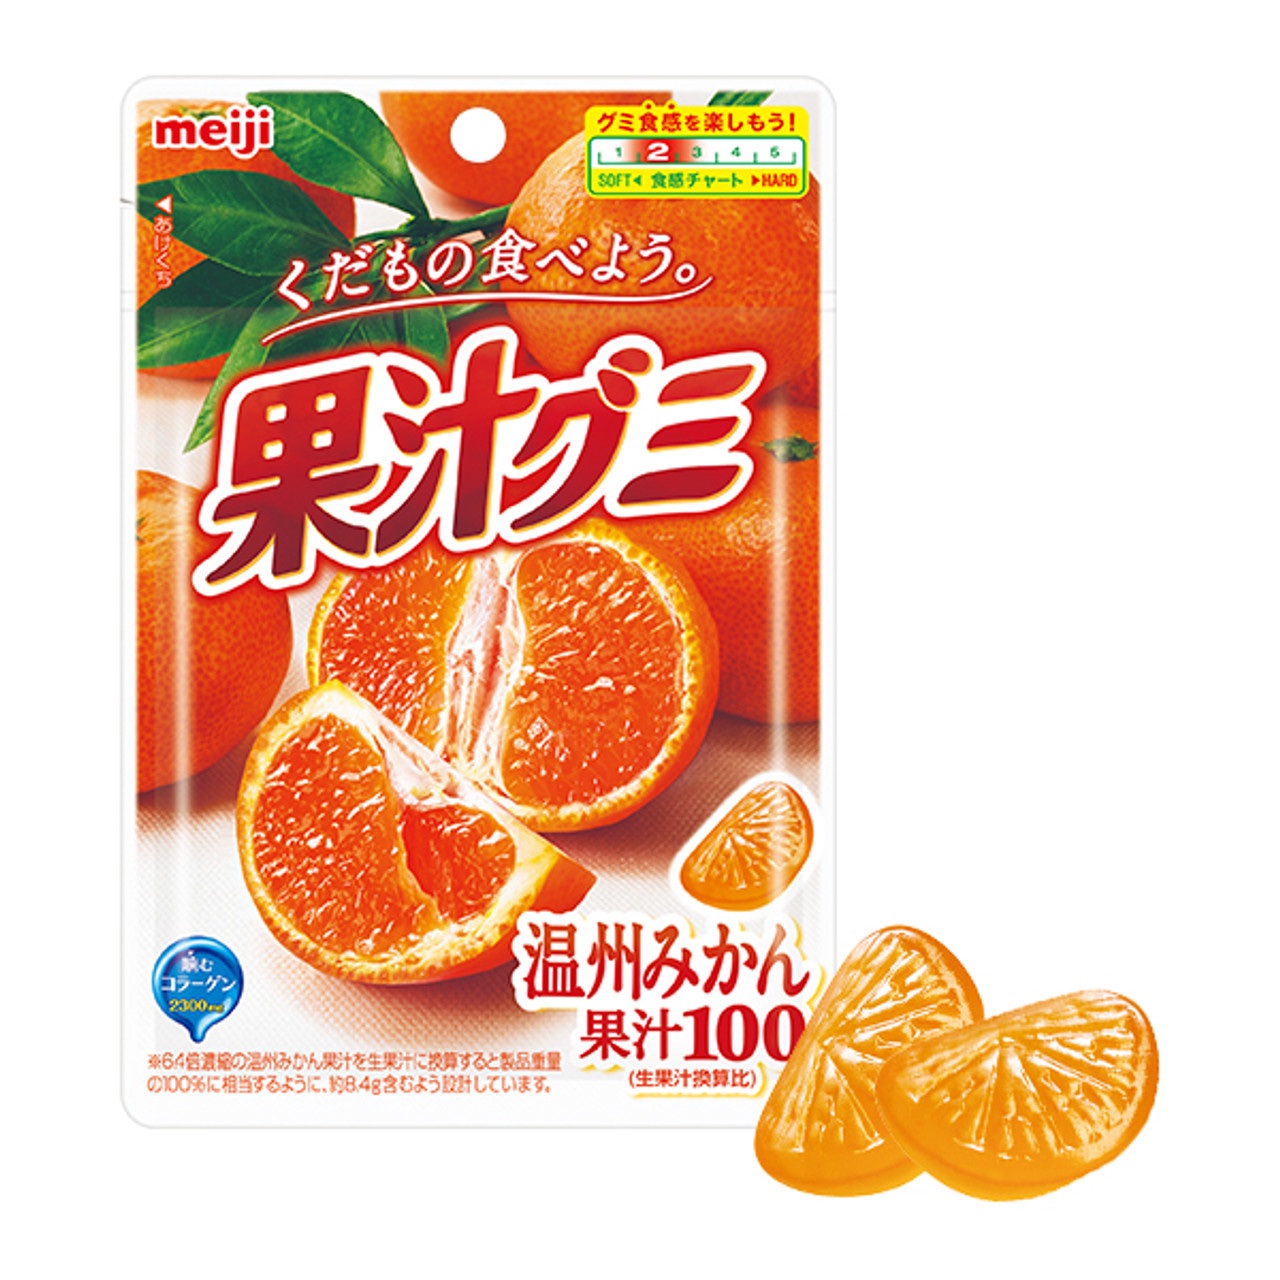 Meiji 100% Fruit Gummy Candy - Orange 明治100%果汁軟糖 - 香橙